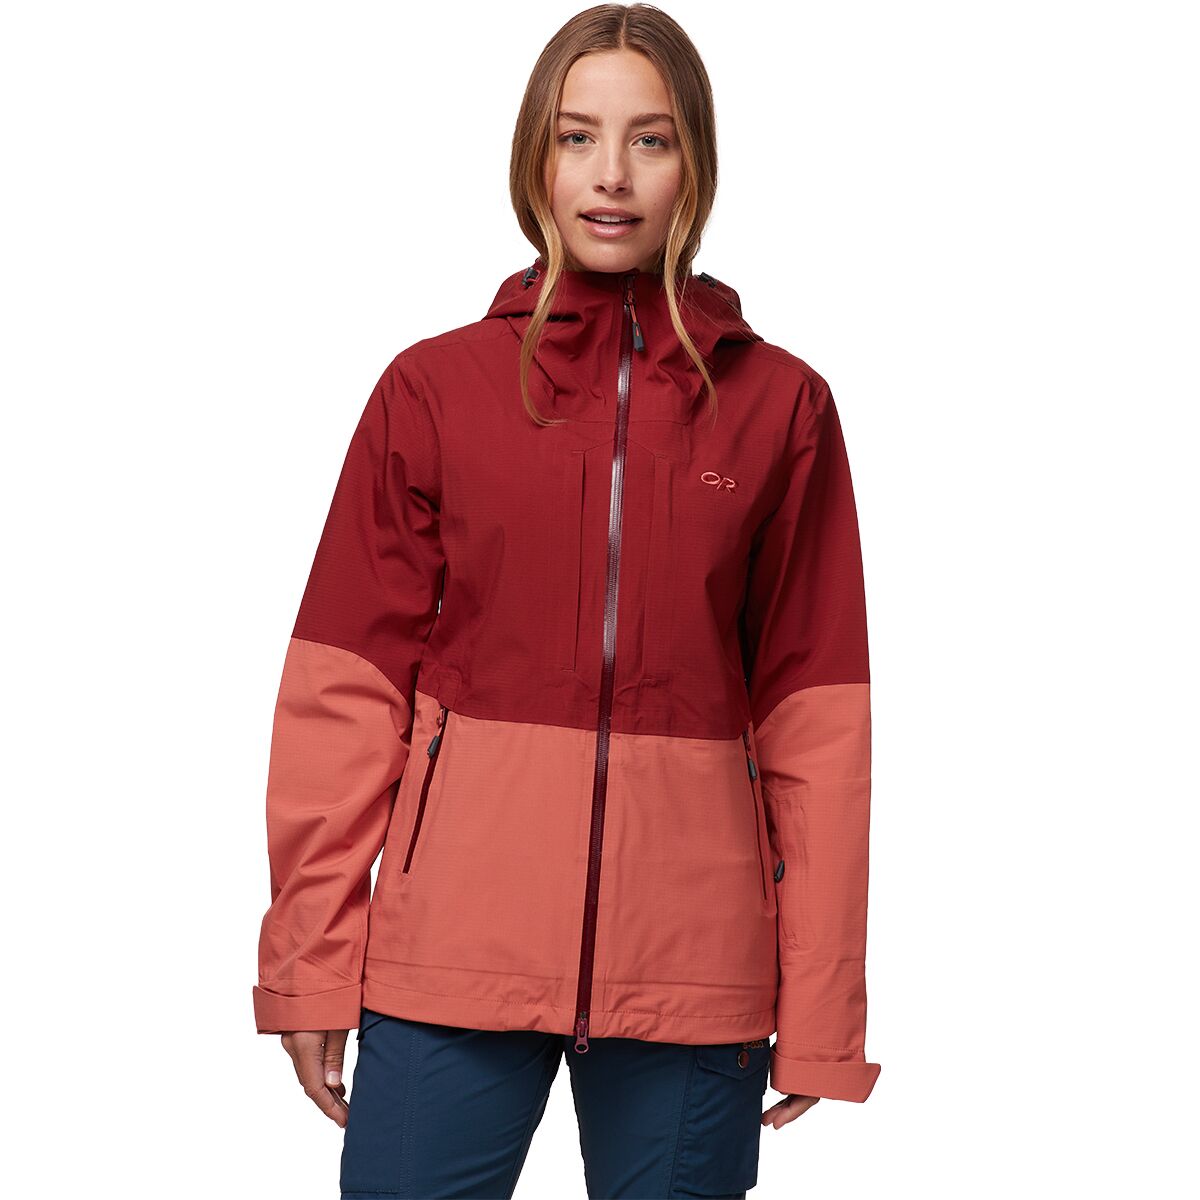 Outdoor Research Carbide Jacket - Women's Madder/Alpenglow